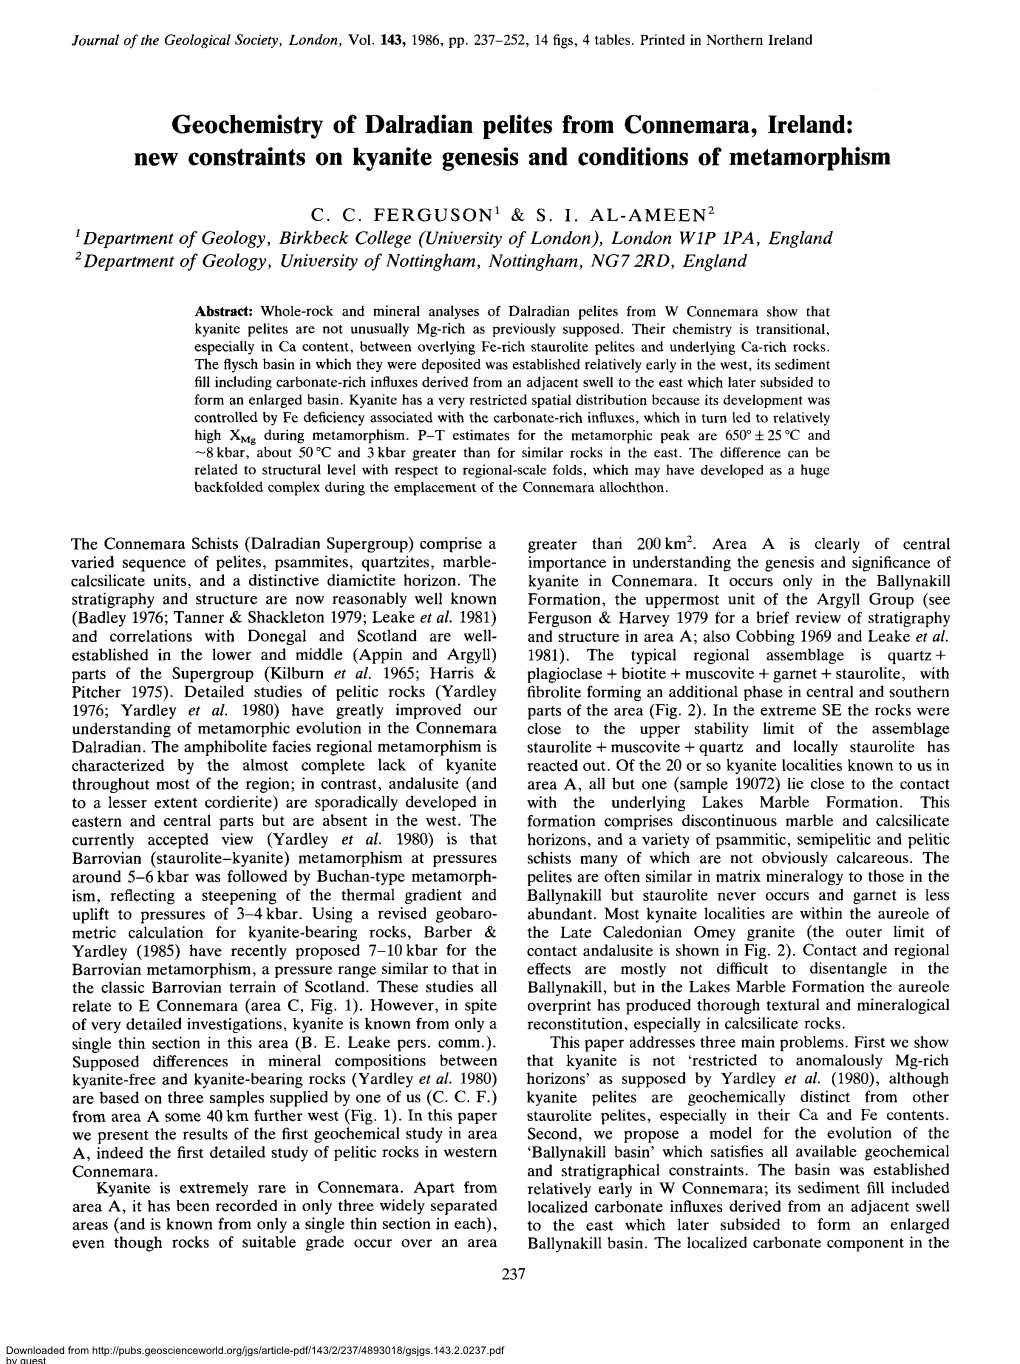 Geochemistry of Dalradian Pelites from Connemara, Ireland: New Constraints on Kyanite Genesis and Conditions of Metamorphism